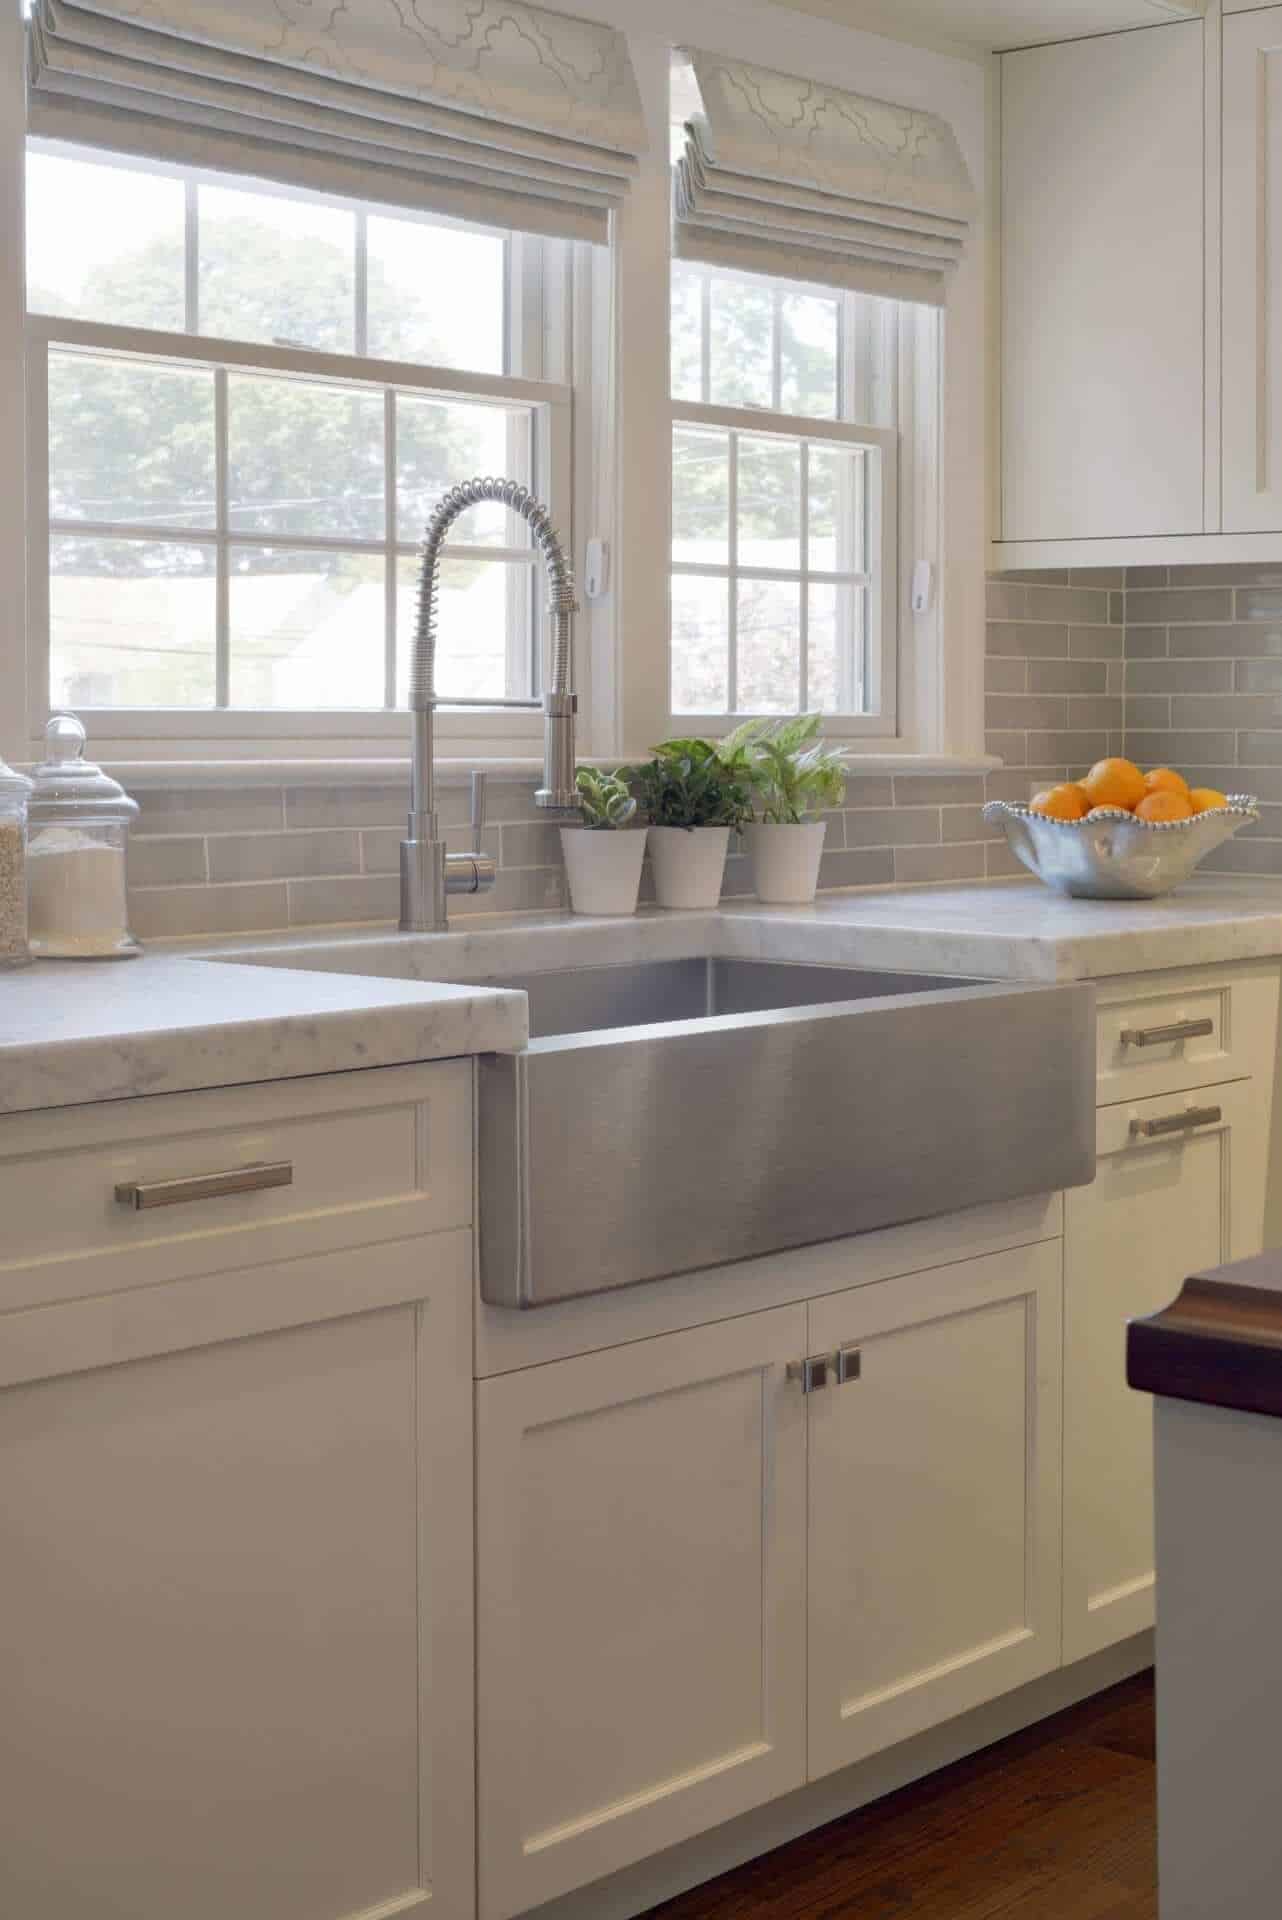 Kitchen features Bilotta Signature cabinets, stainless apron sink and grey ceramic tile backsplash.